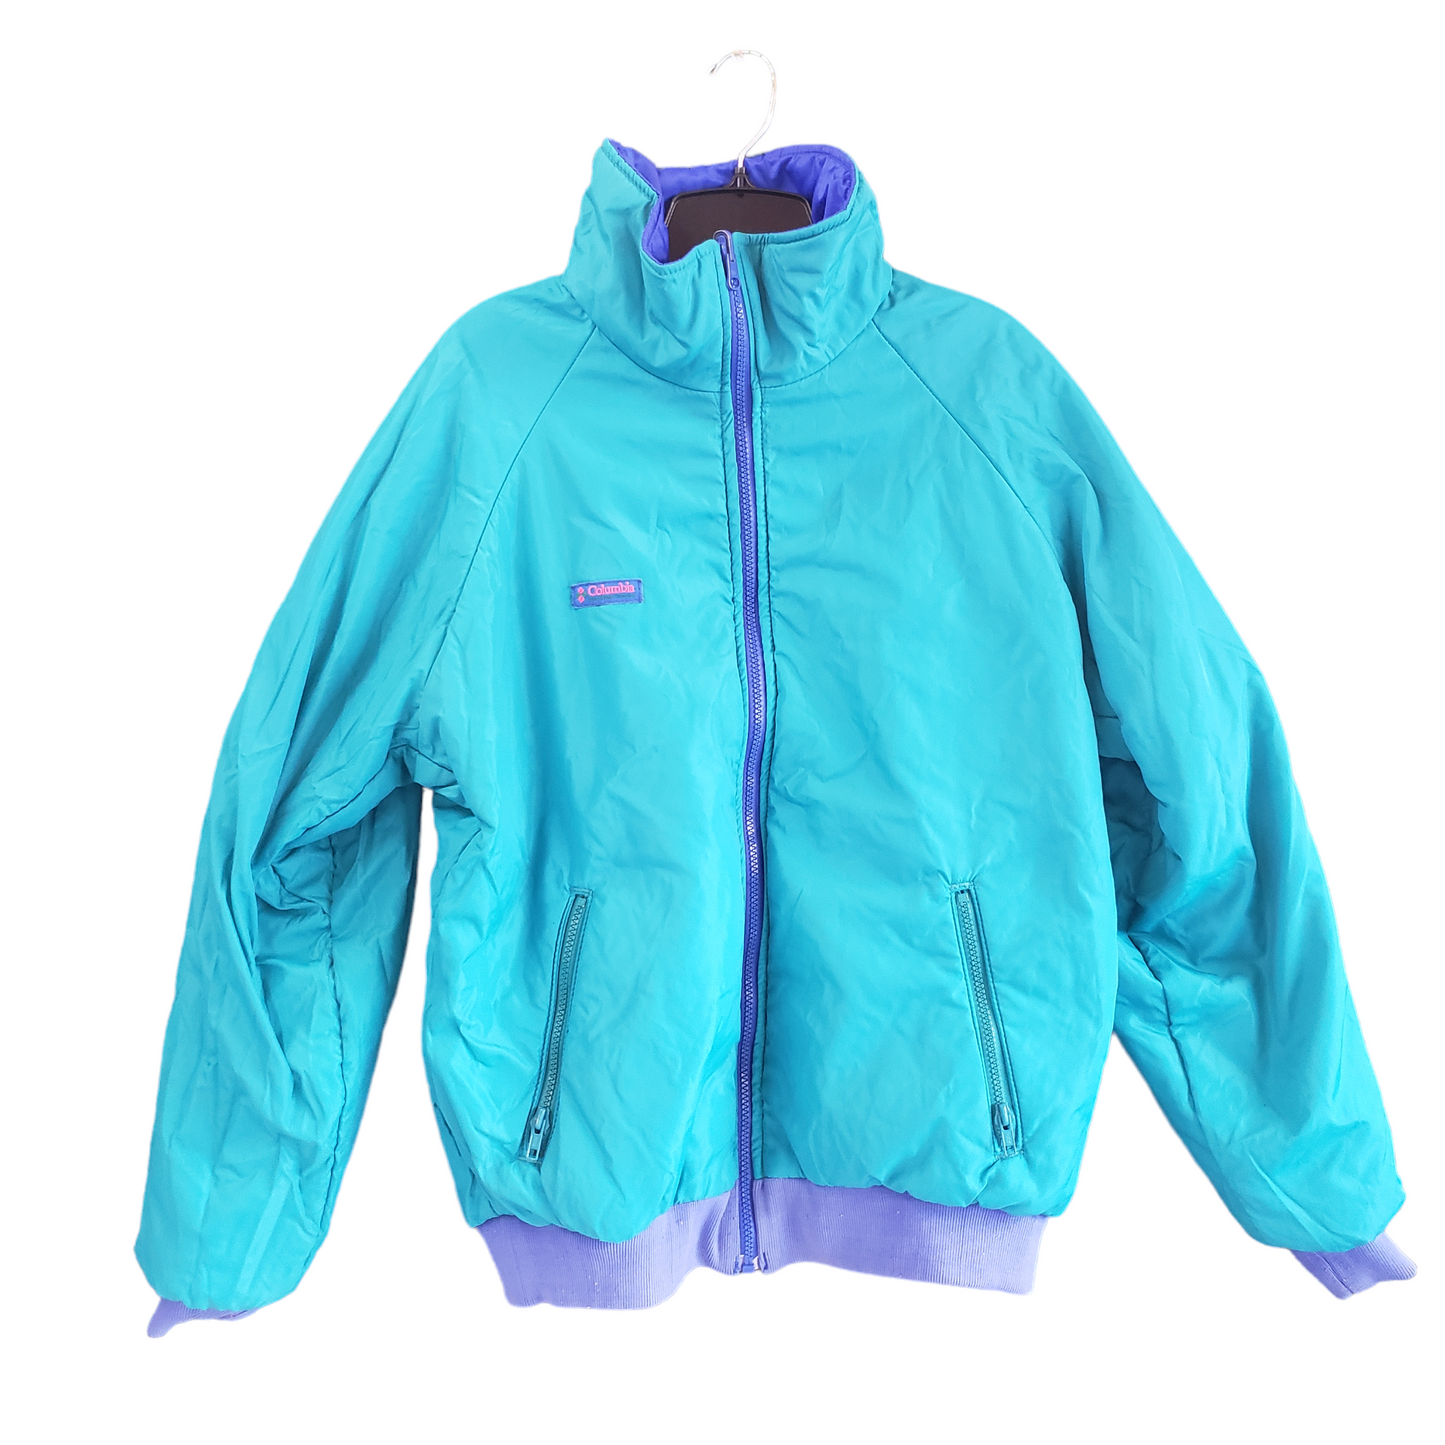 Columbia Sportswear Vintage Reversible Zip Up Men's Jacket Blue/Green - Size Medium